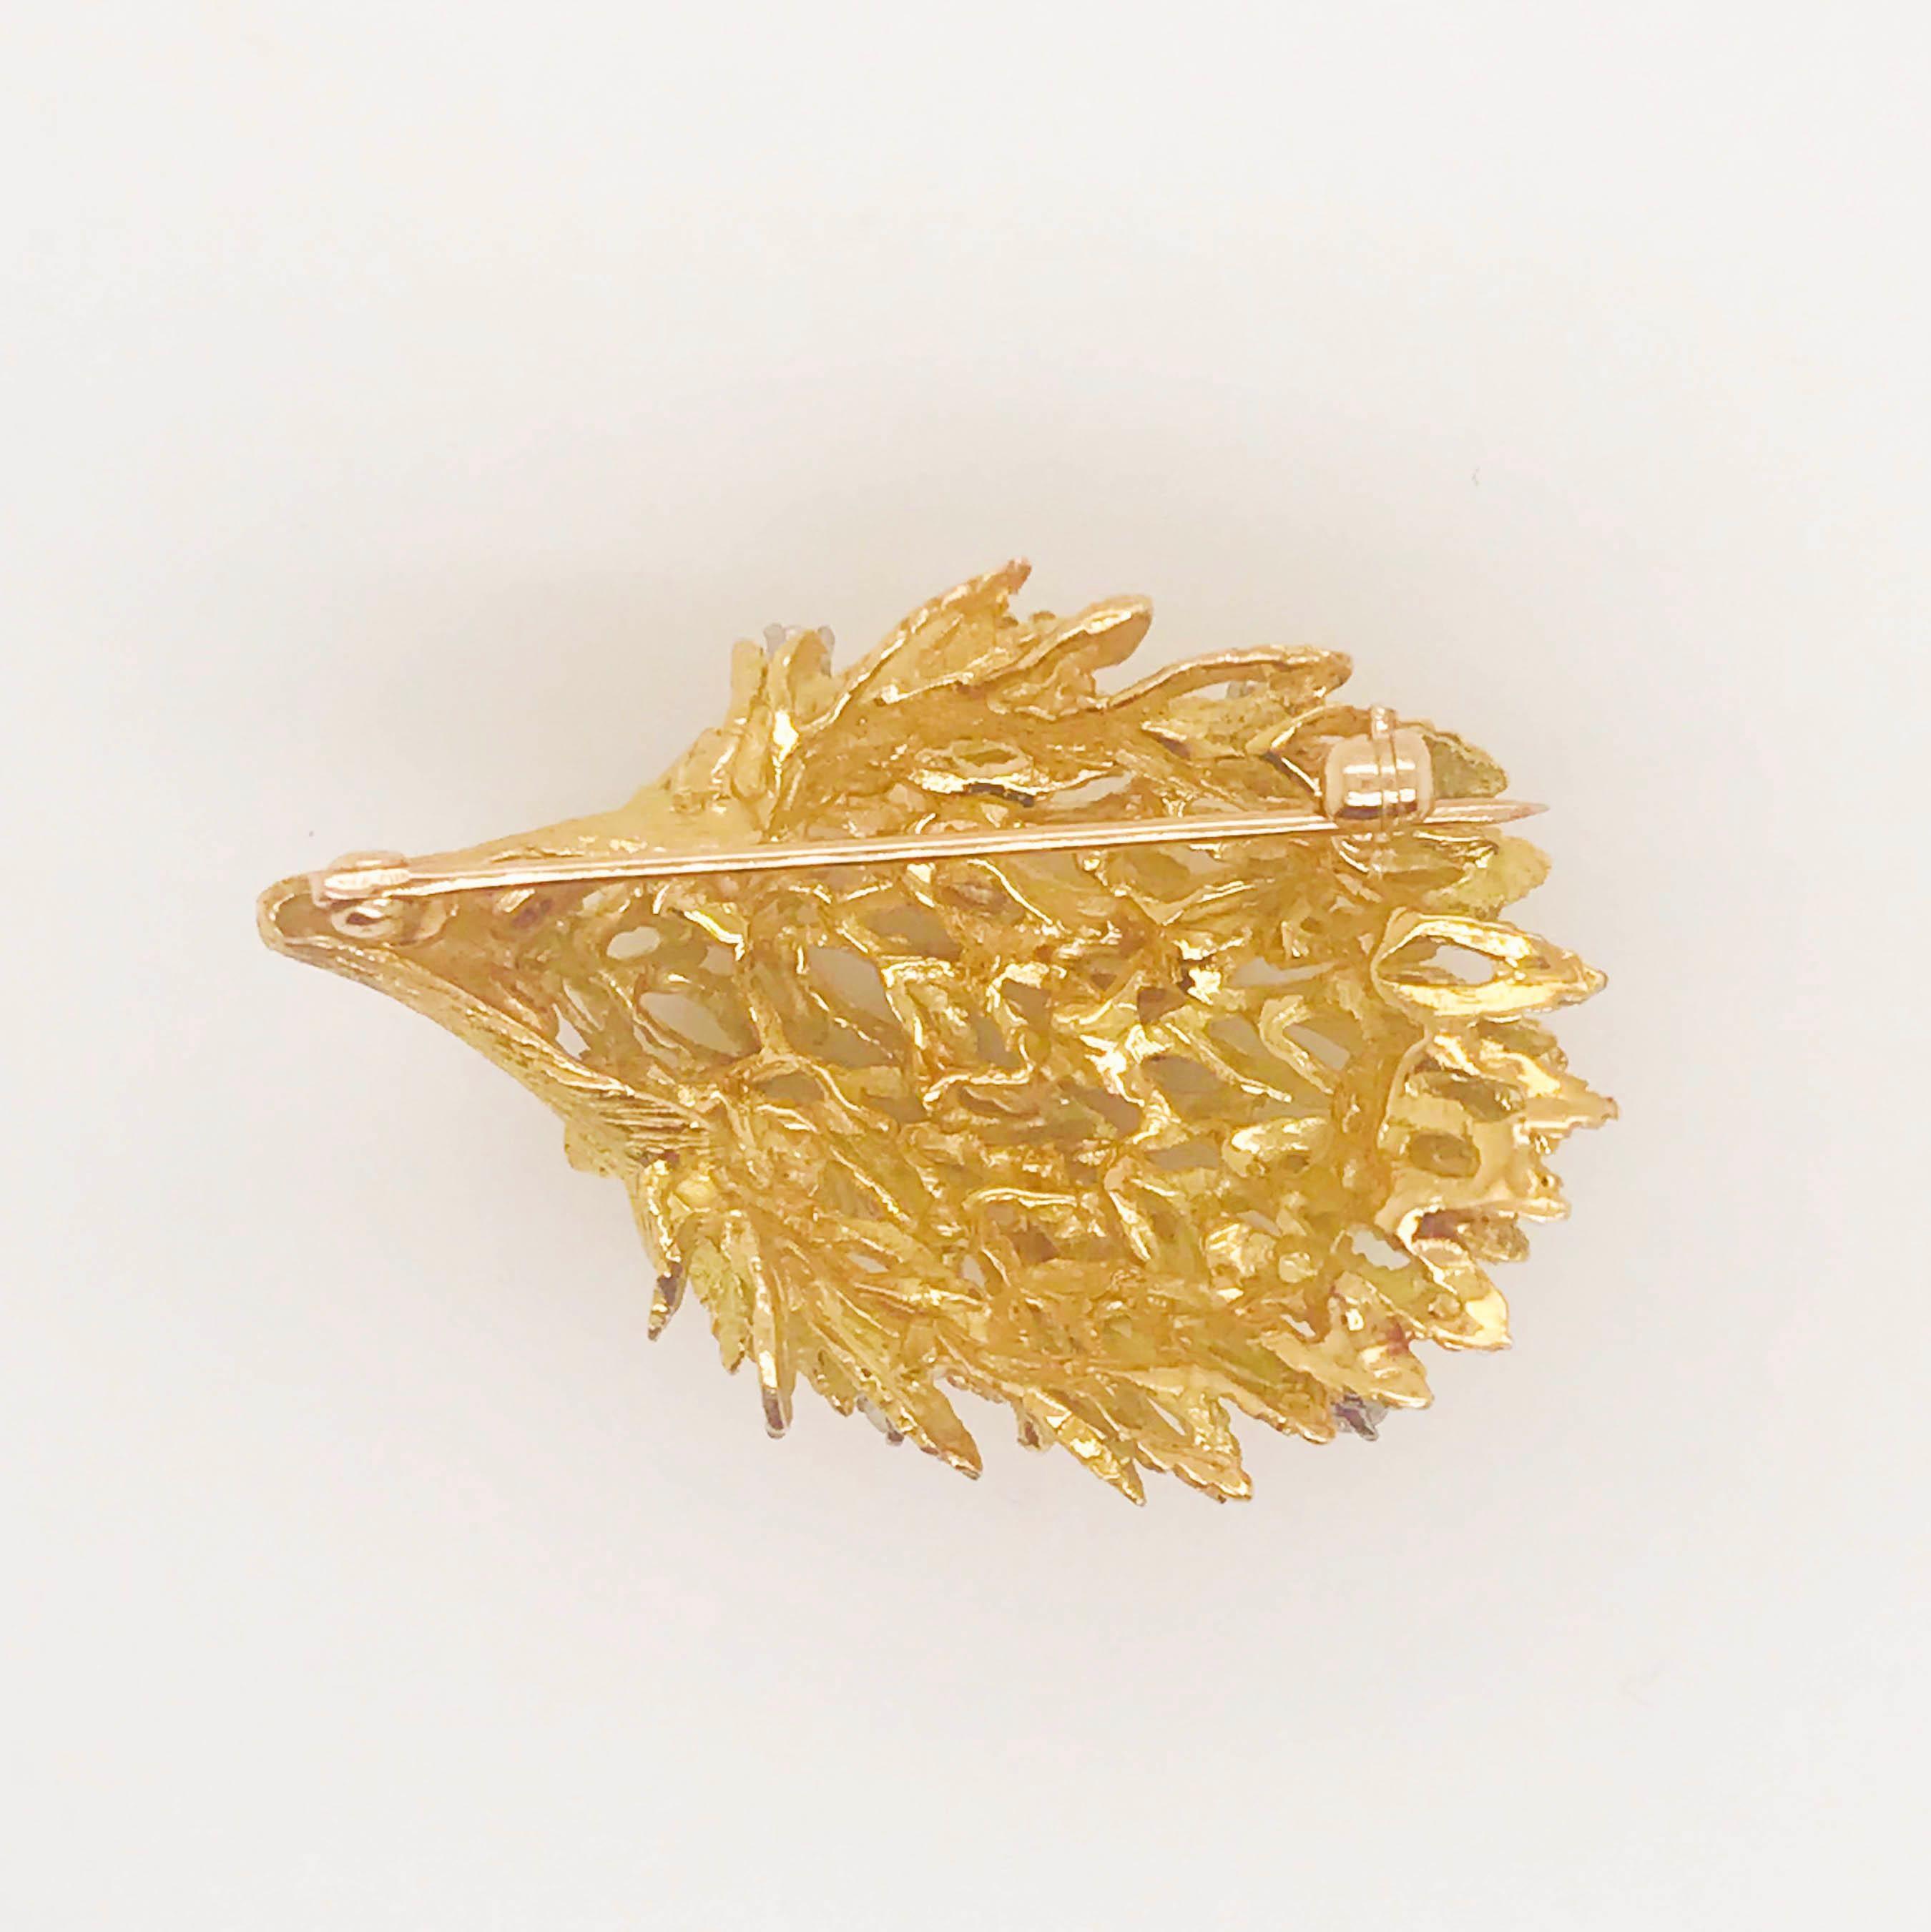 Gemstone Porcupine Brooch, 0.25 Diamond and Ruby, Pin, 14 Karat Gold XL Size 2